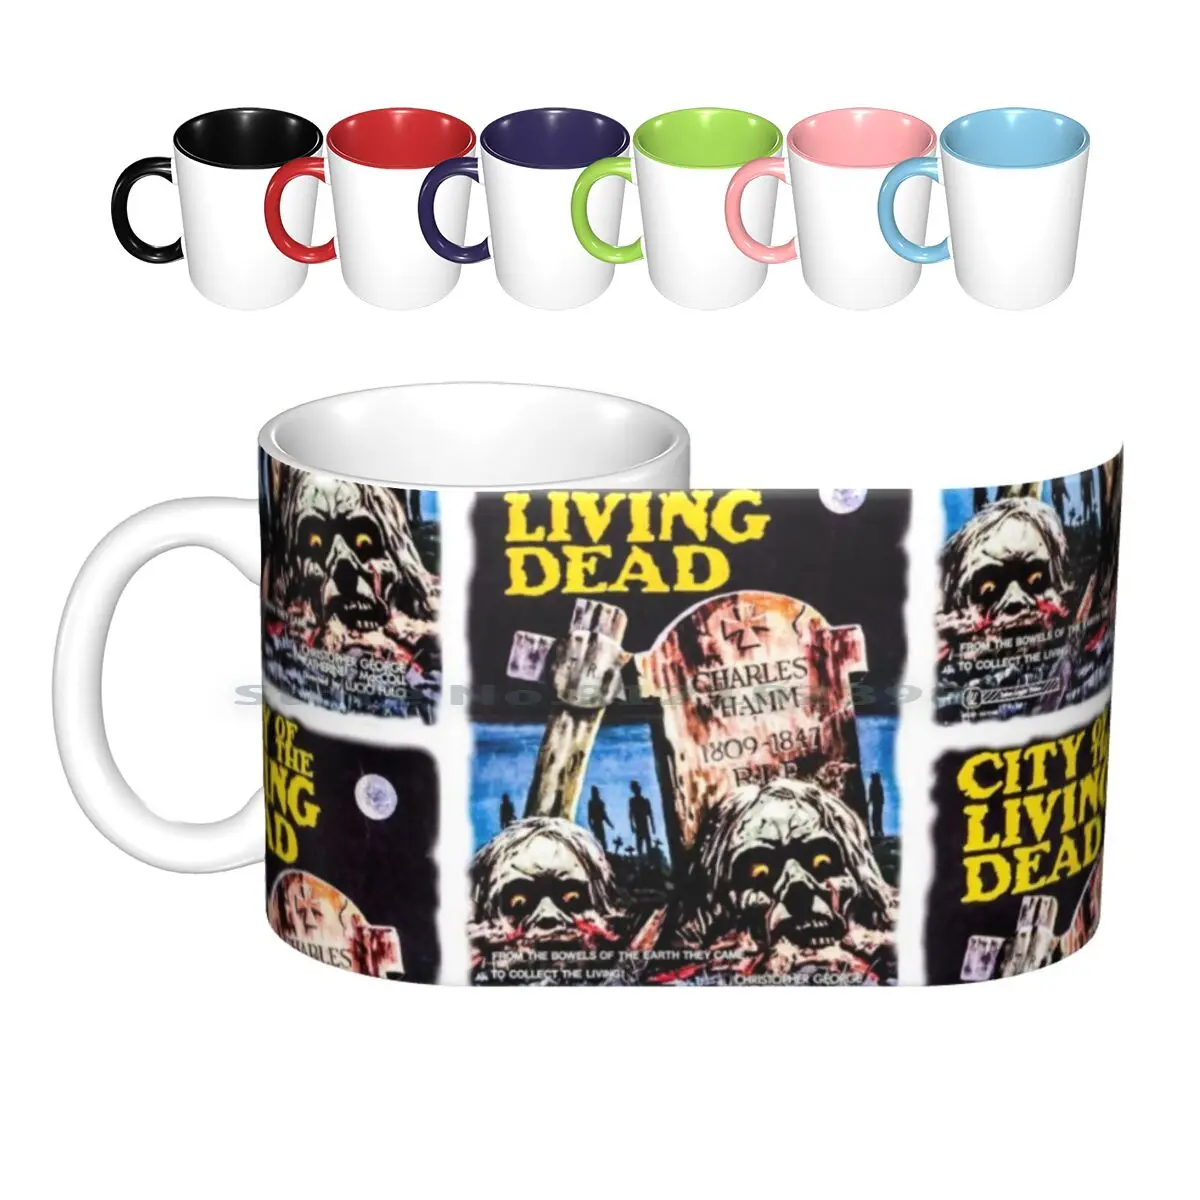 City Of The Living Dead Print Ceramic Mugs Coffee Cups Milk Tea Mug City Living Dead Lucio Fulci Cult Movie Horror Film Films